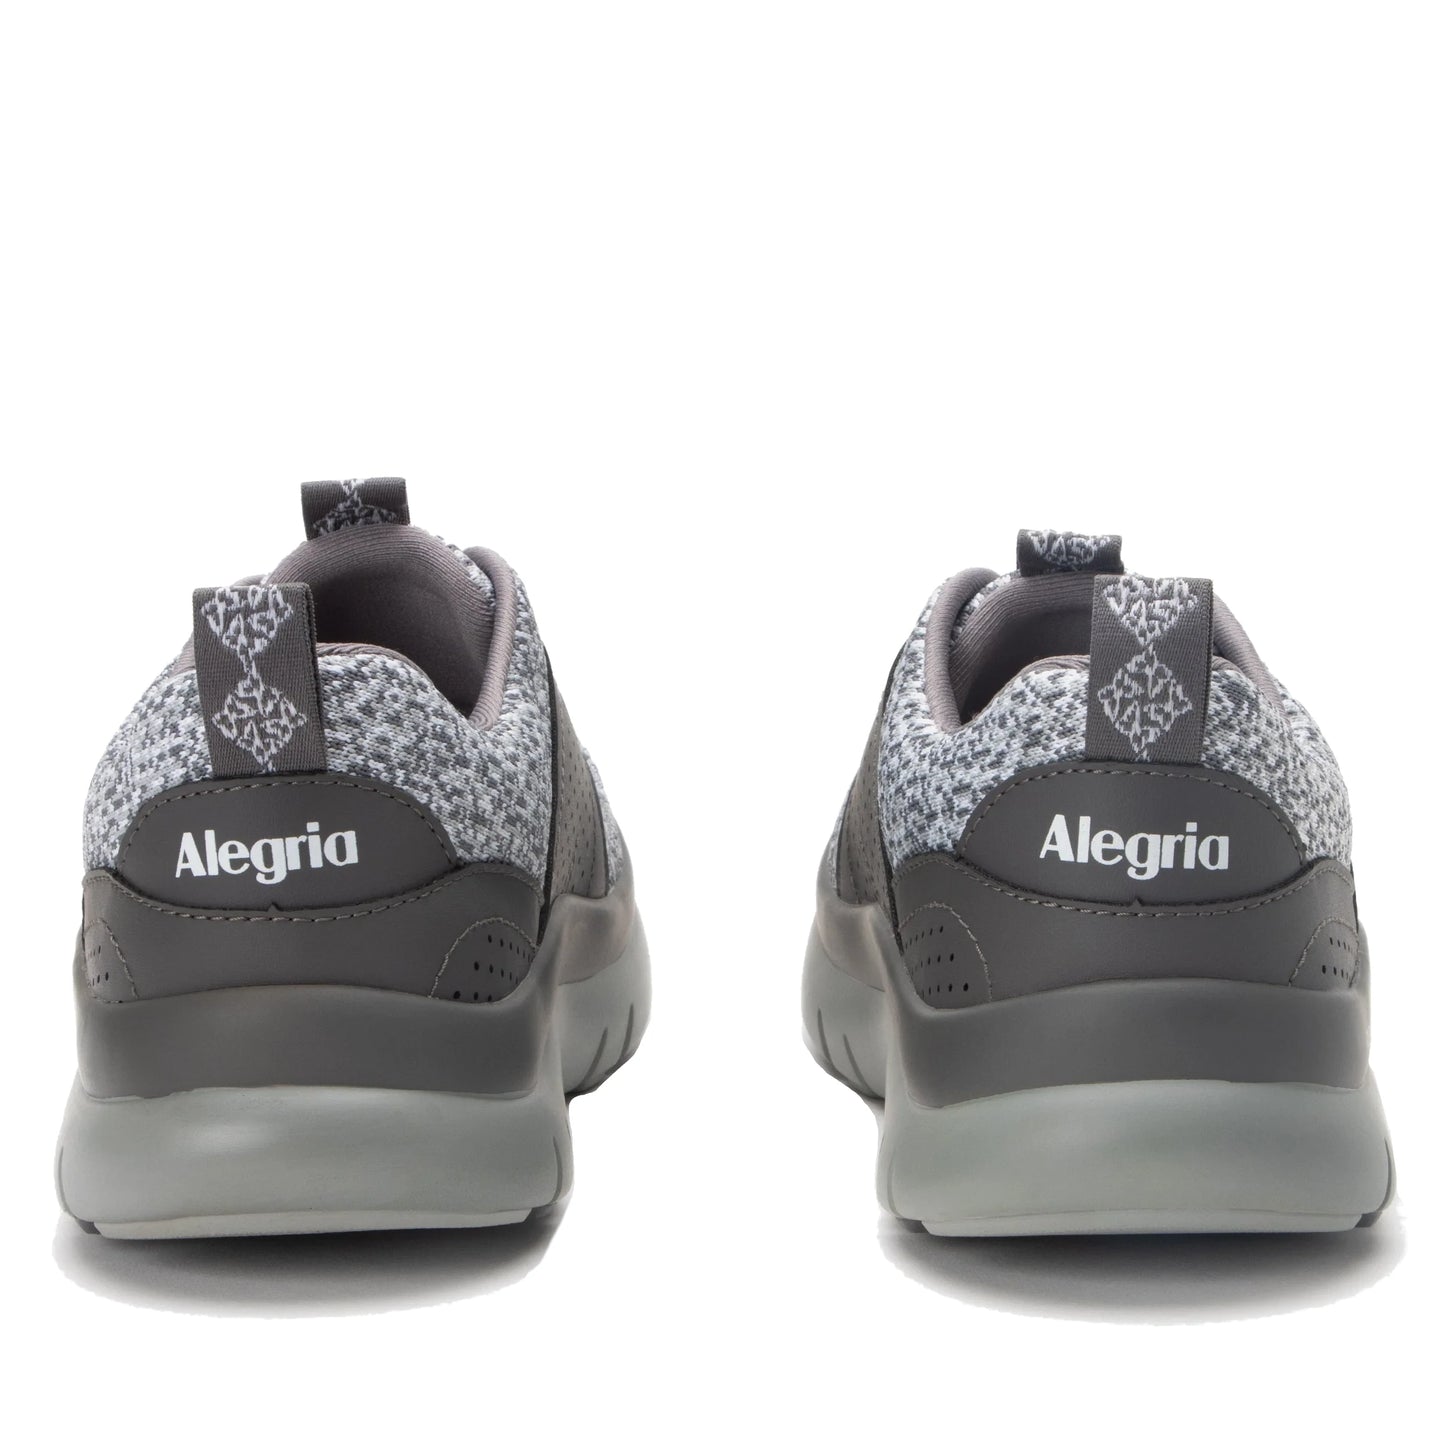 Traq by Alegria Women's Rotation Shoe - Grey